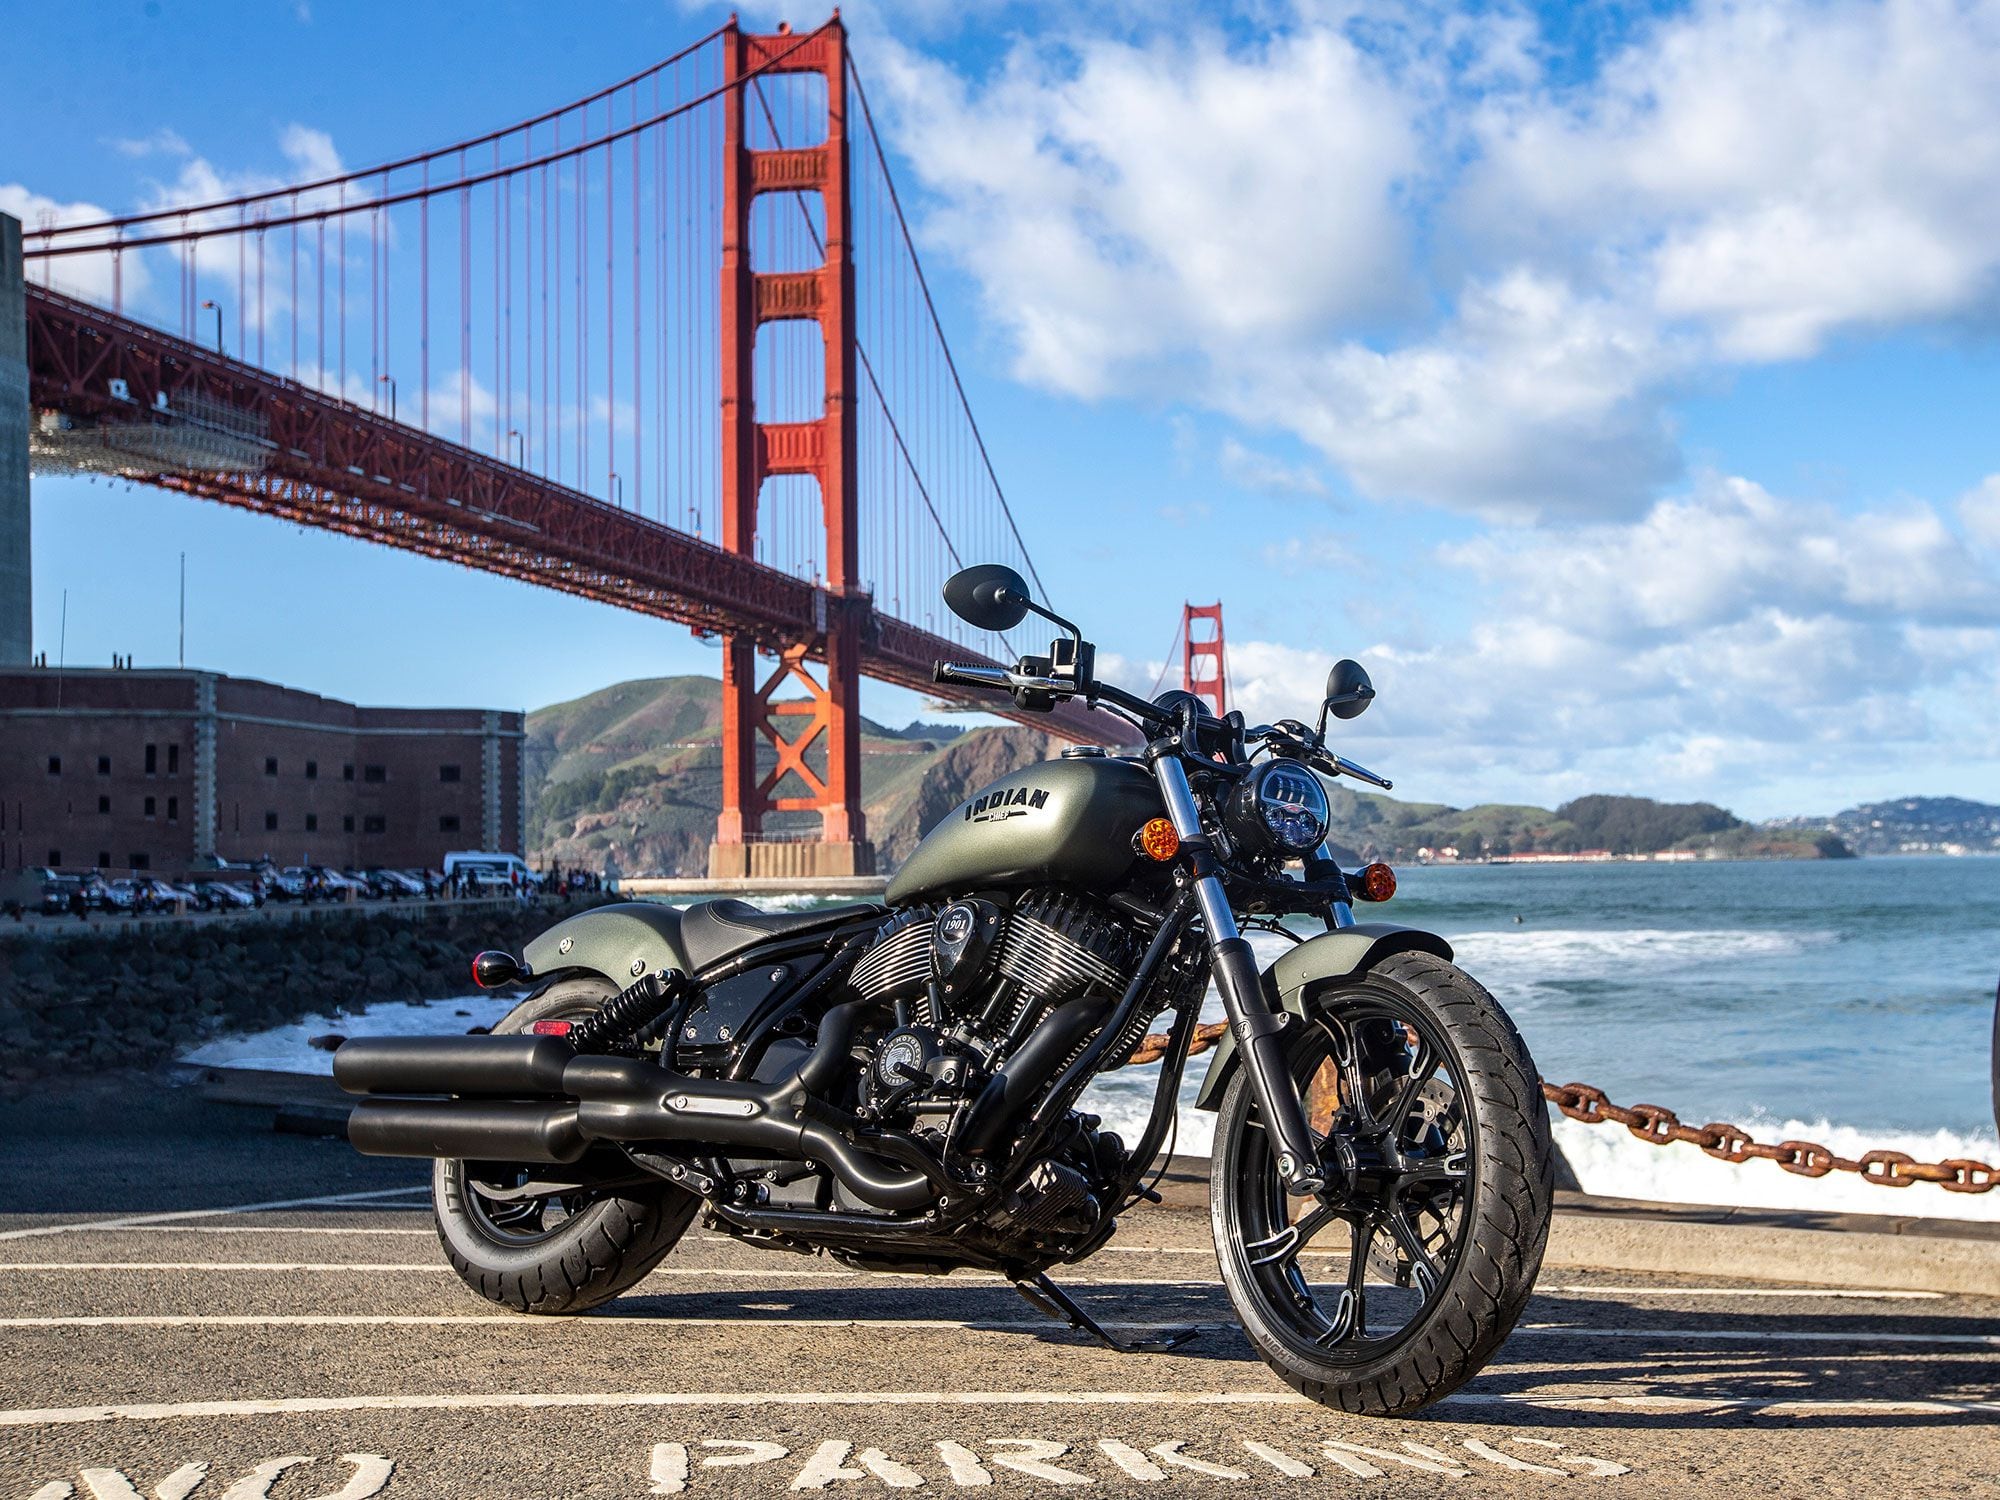 The 2022 Indian Chief Dark Horse in Alumina Jade below the Golden Gate Bridge in San Francisco. MSRP for this bike is $16,999.